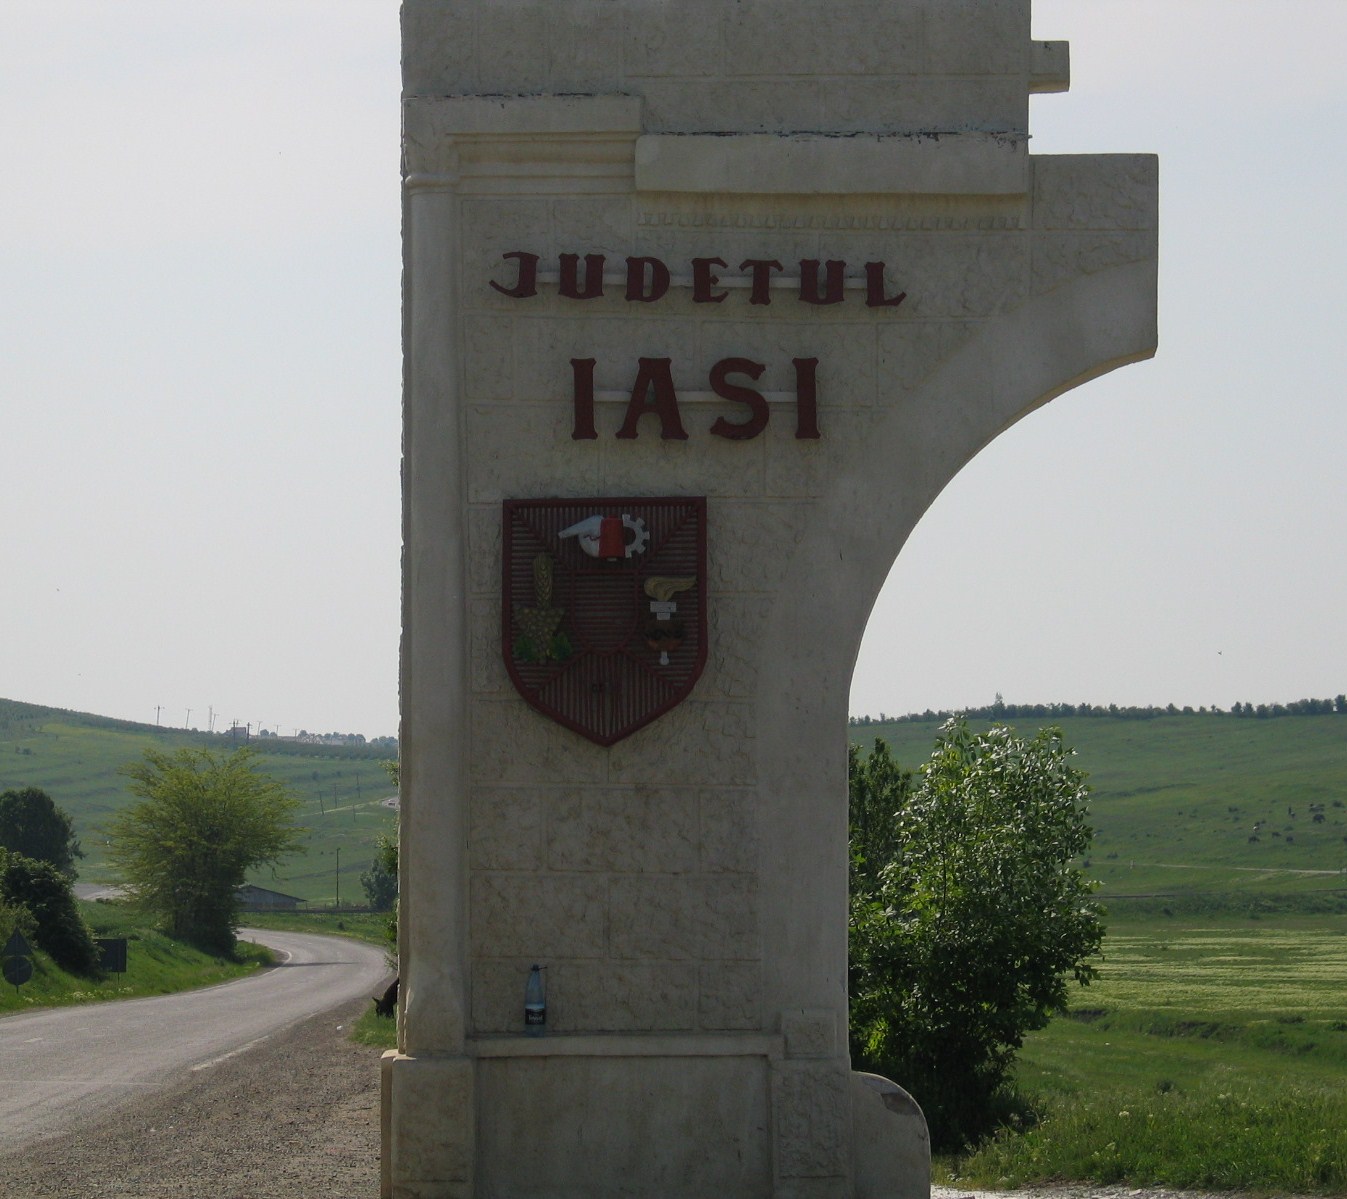 Iasi Judetul Border with Botosani